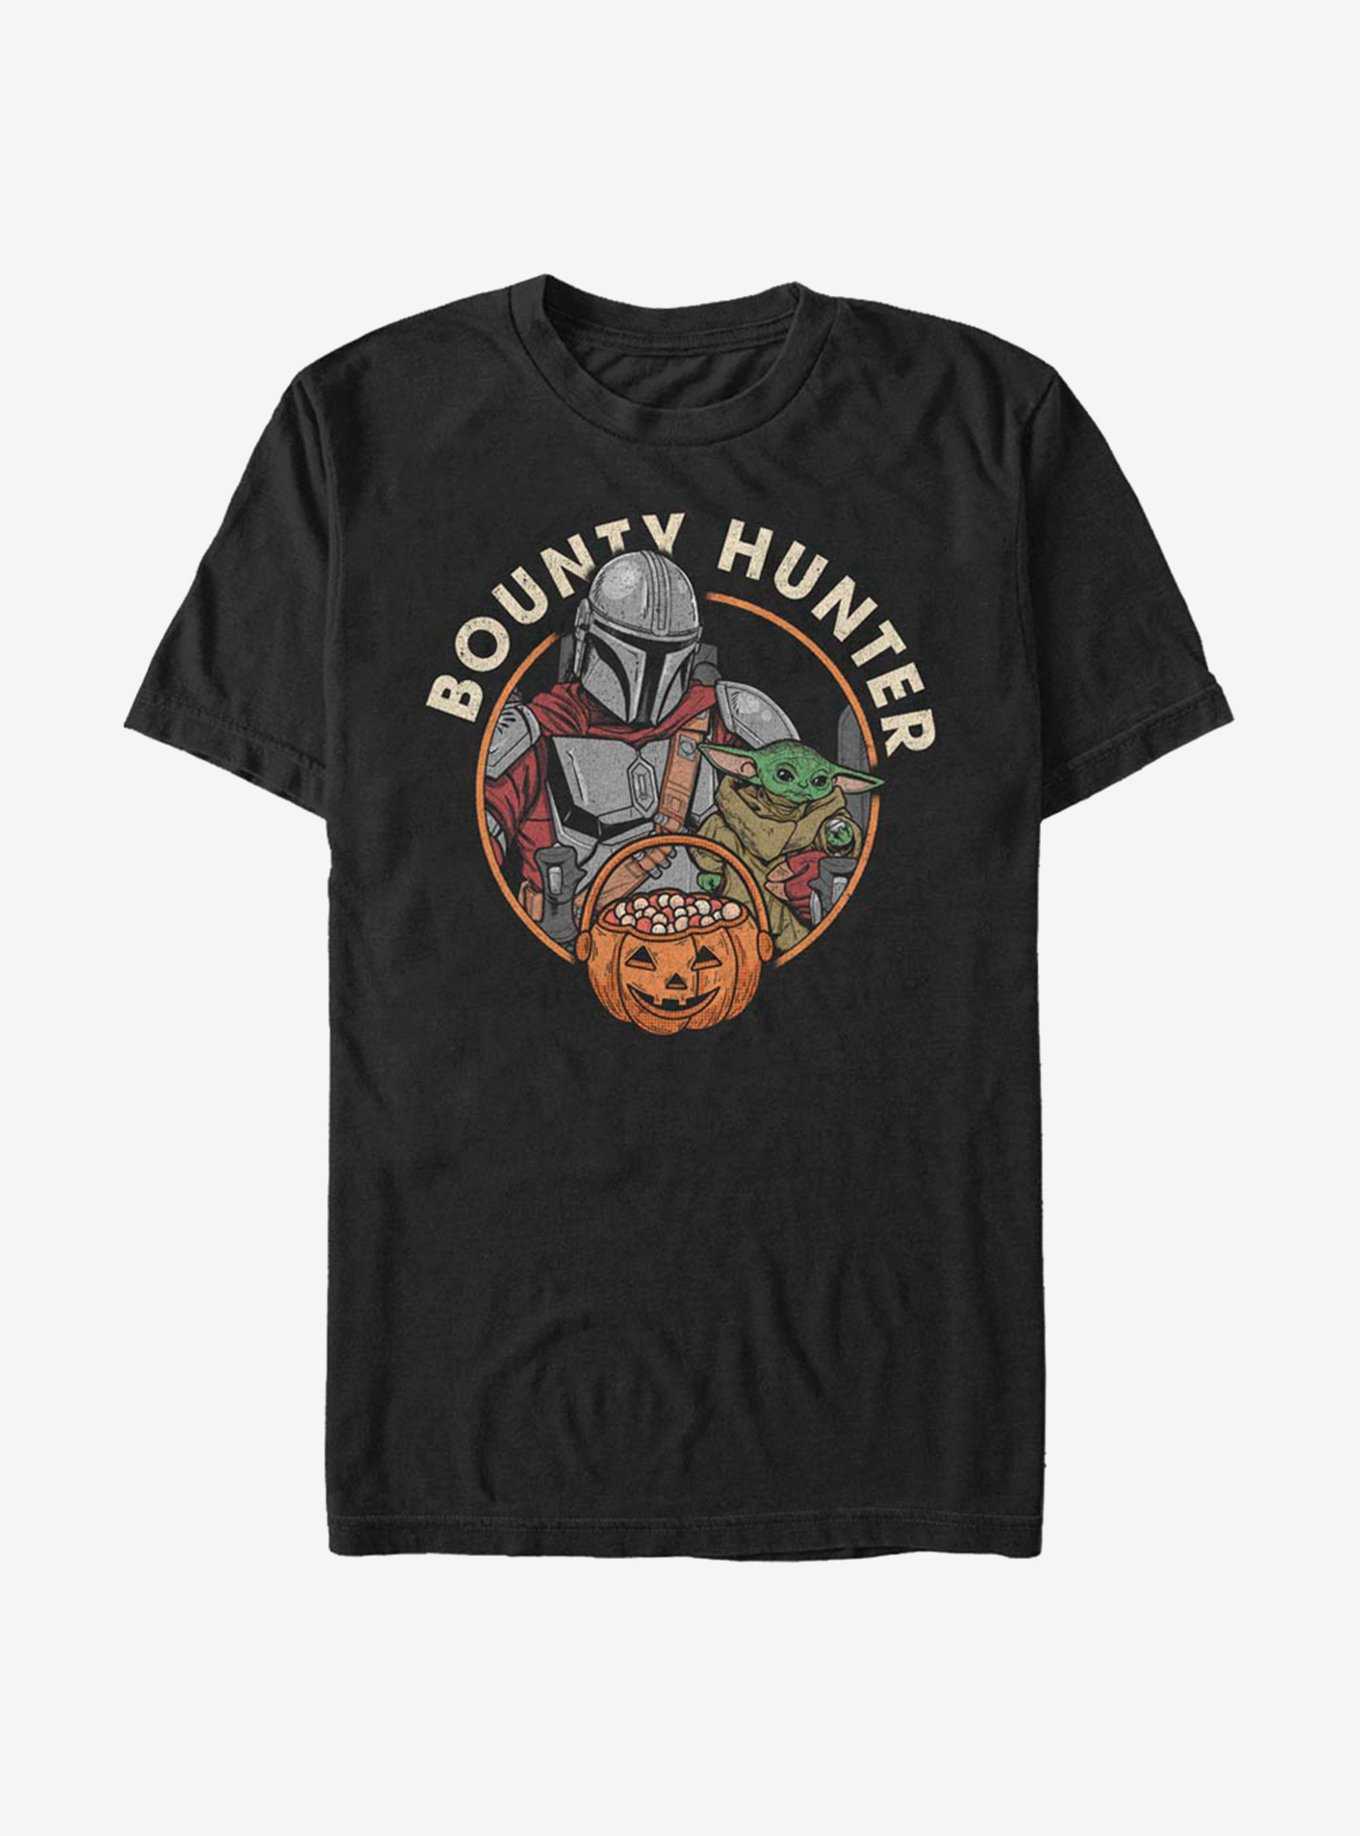 Star Wars The Mandalorian Candy Hunter The Child T-Shirt, , hi-res